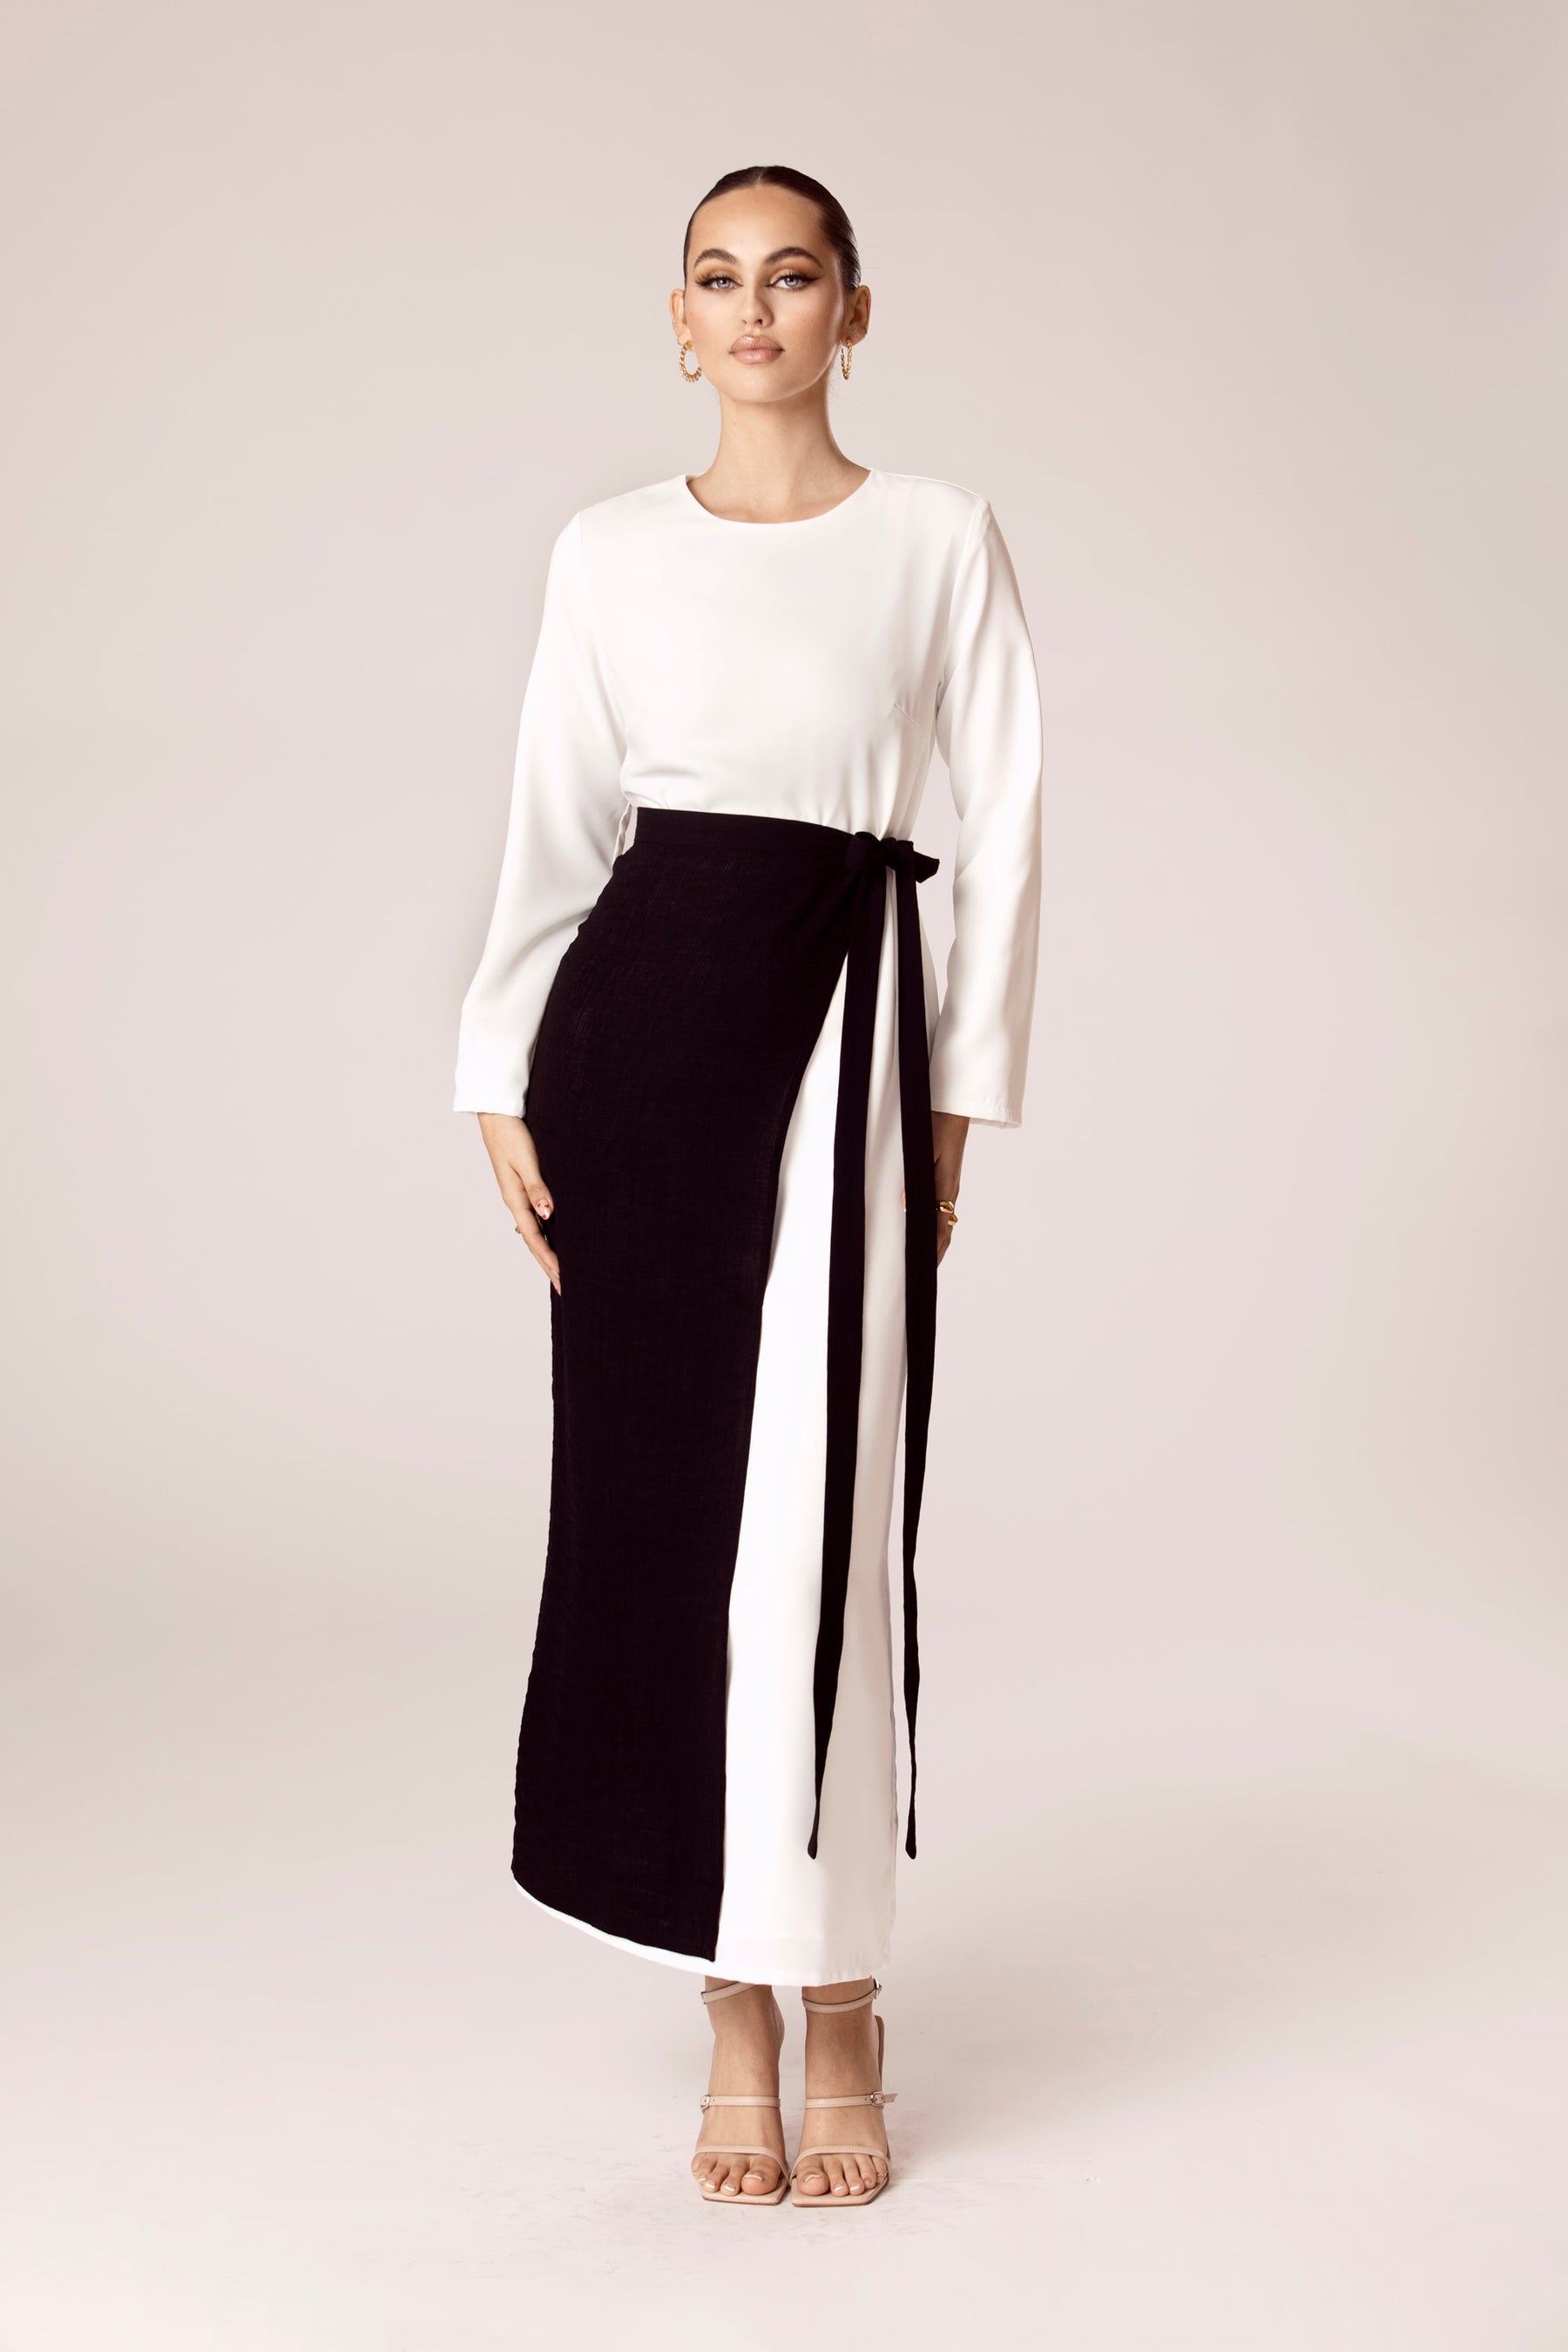 Rana Textured Overlay Tie Skirt - Black Veiled Collection 